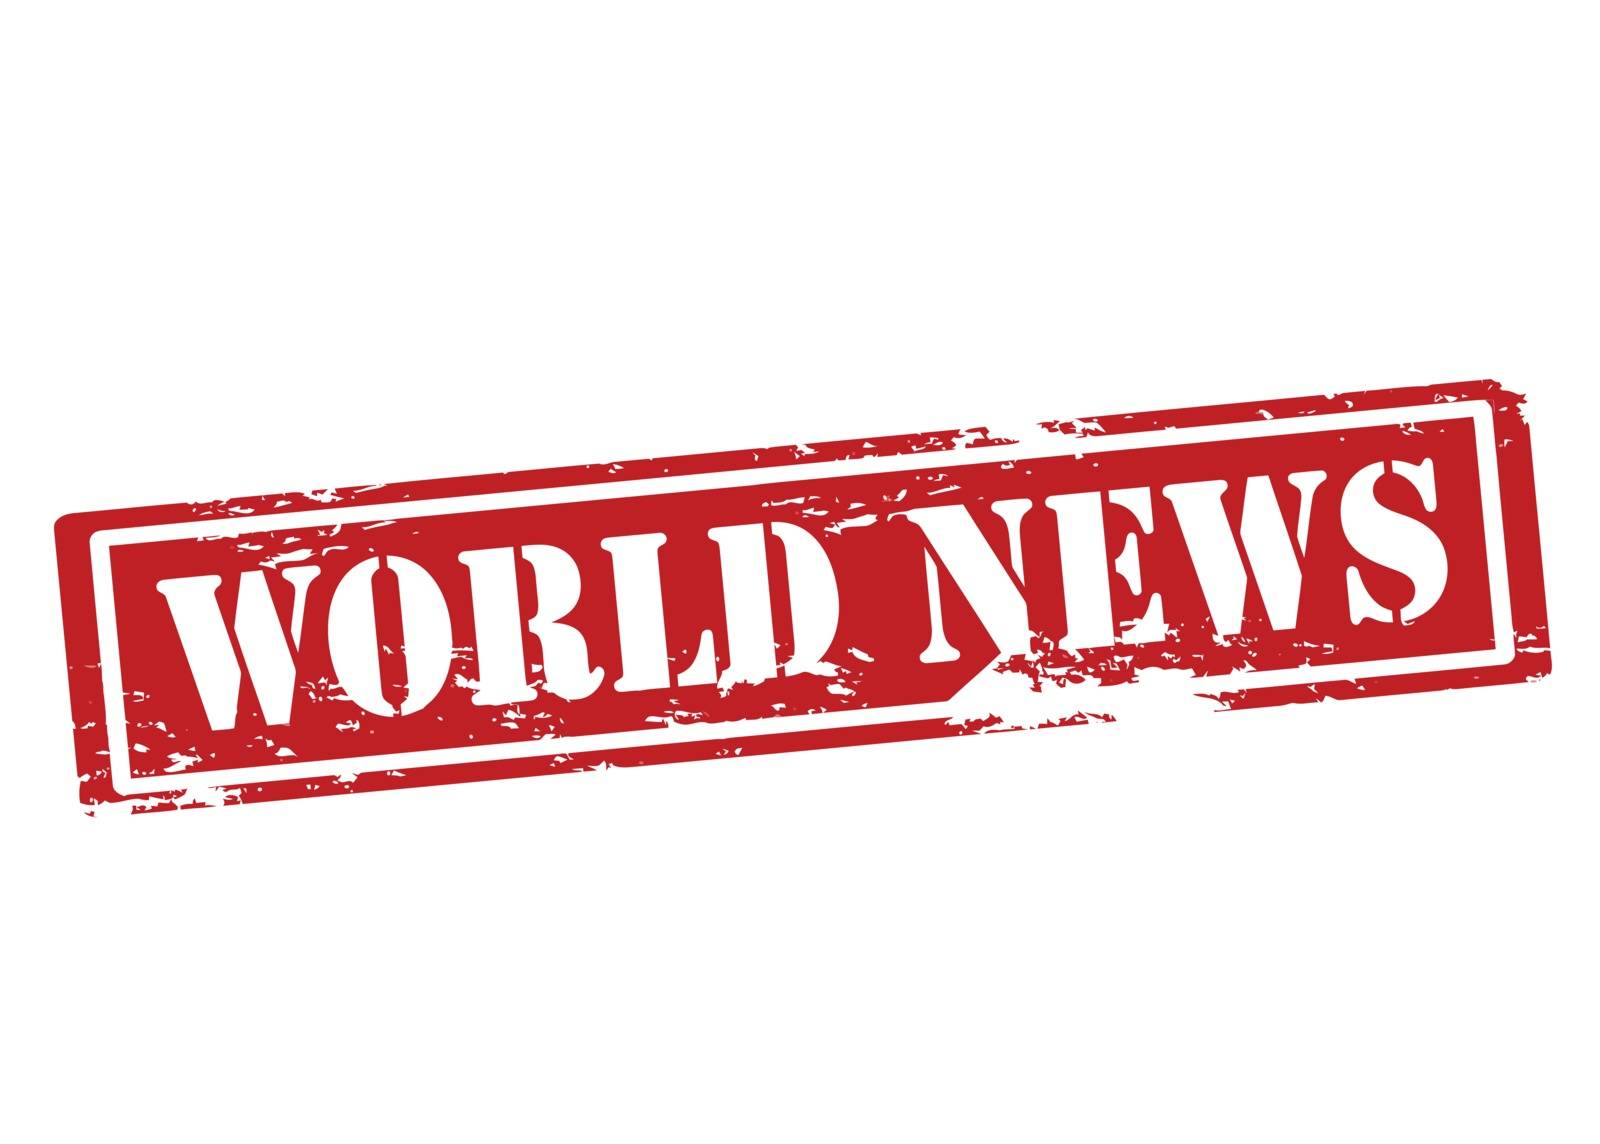 World news by carmenbobo